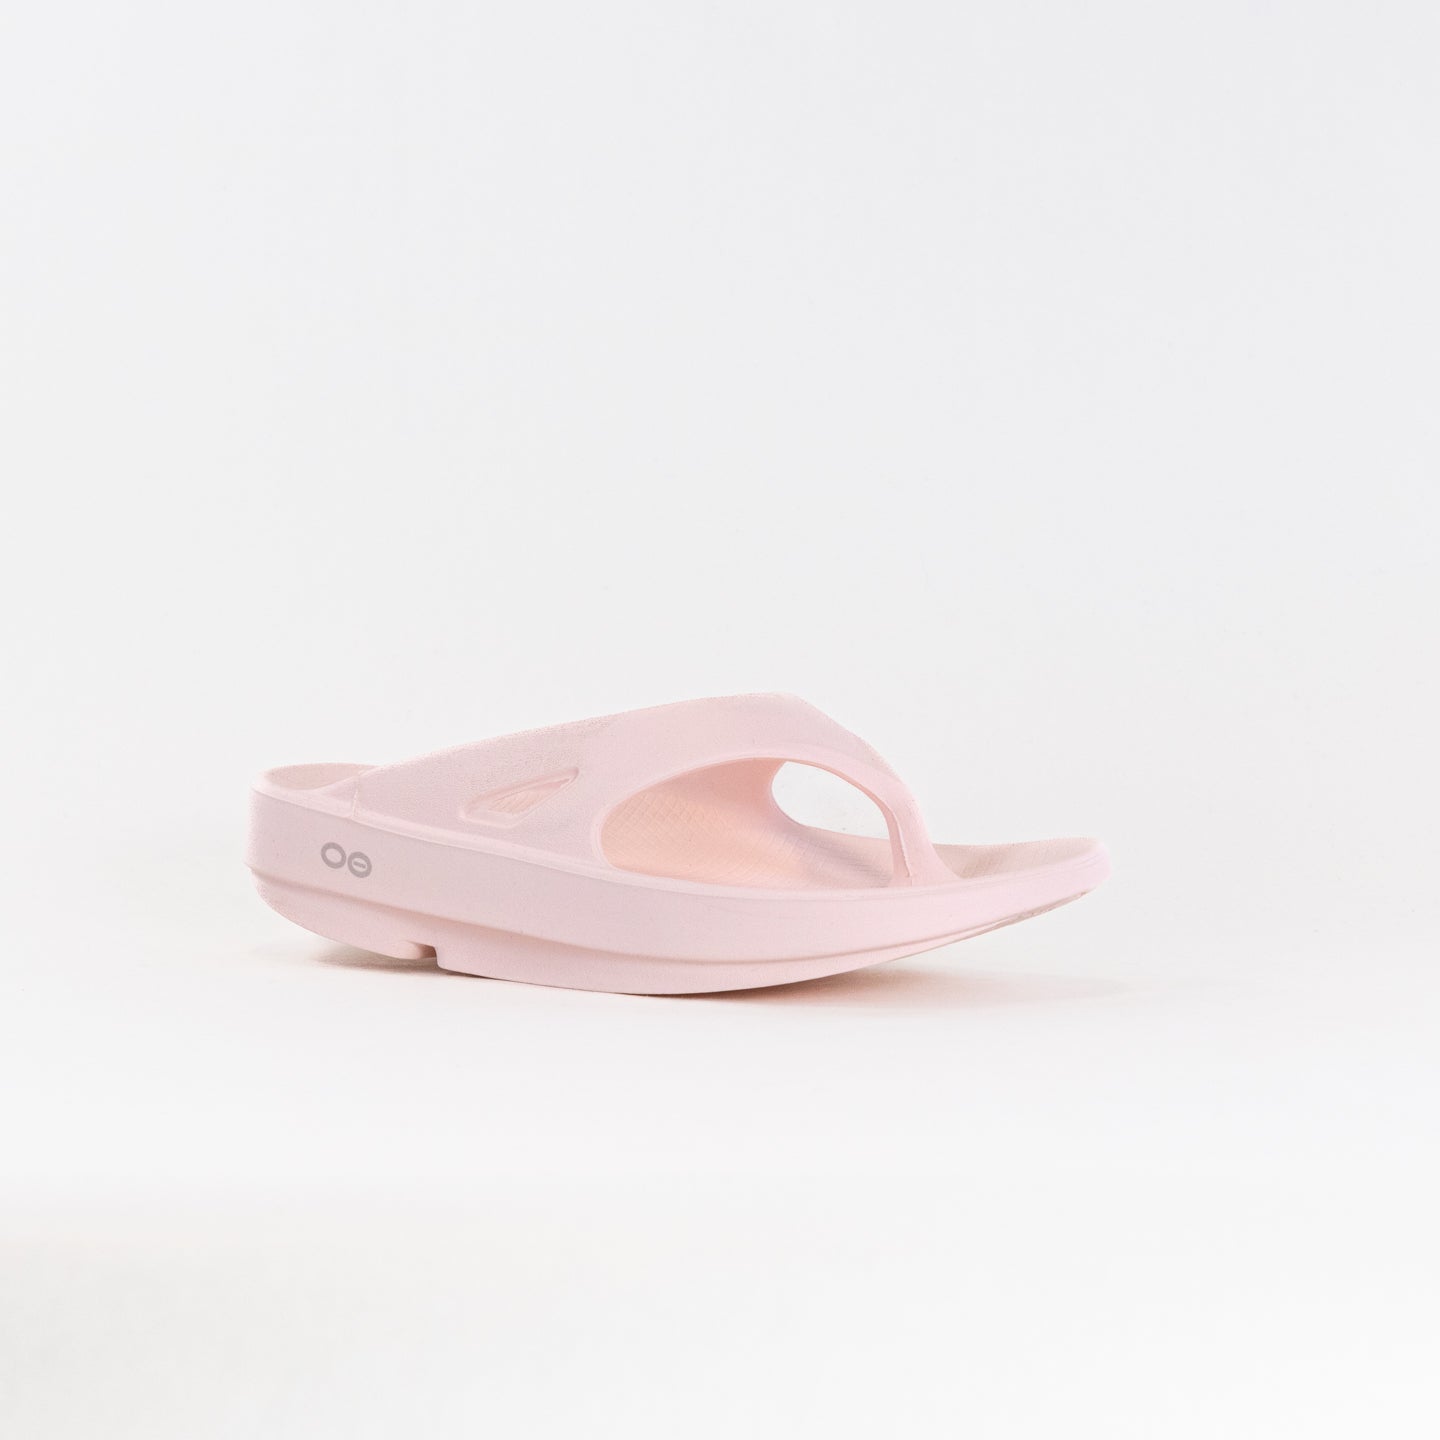 OOFOS Original Sandal (Women's) - Blush